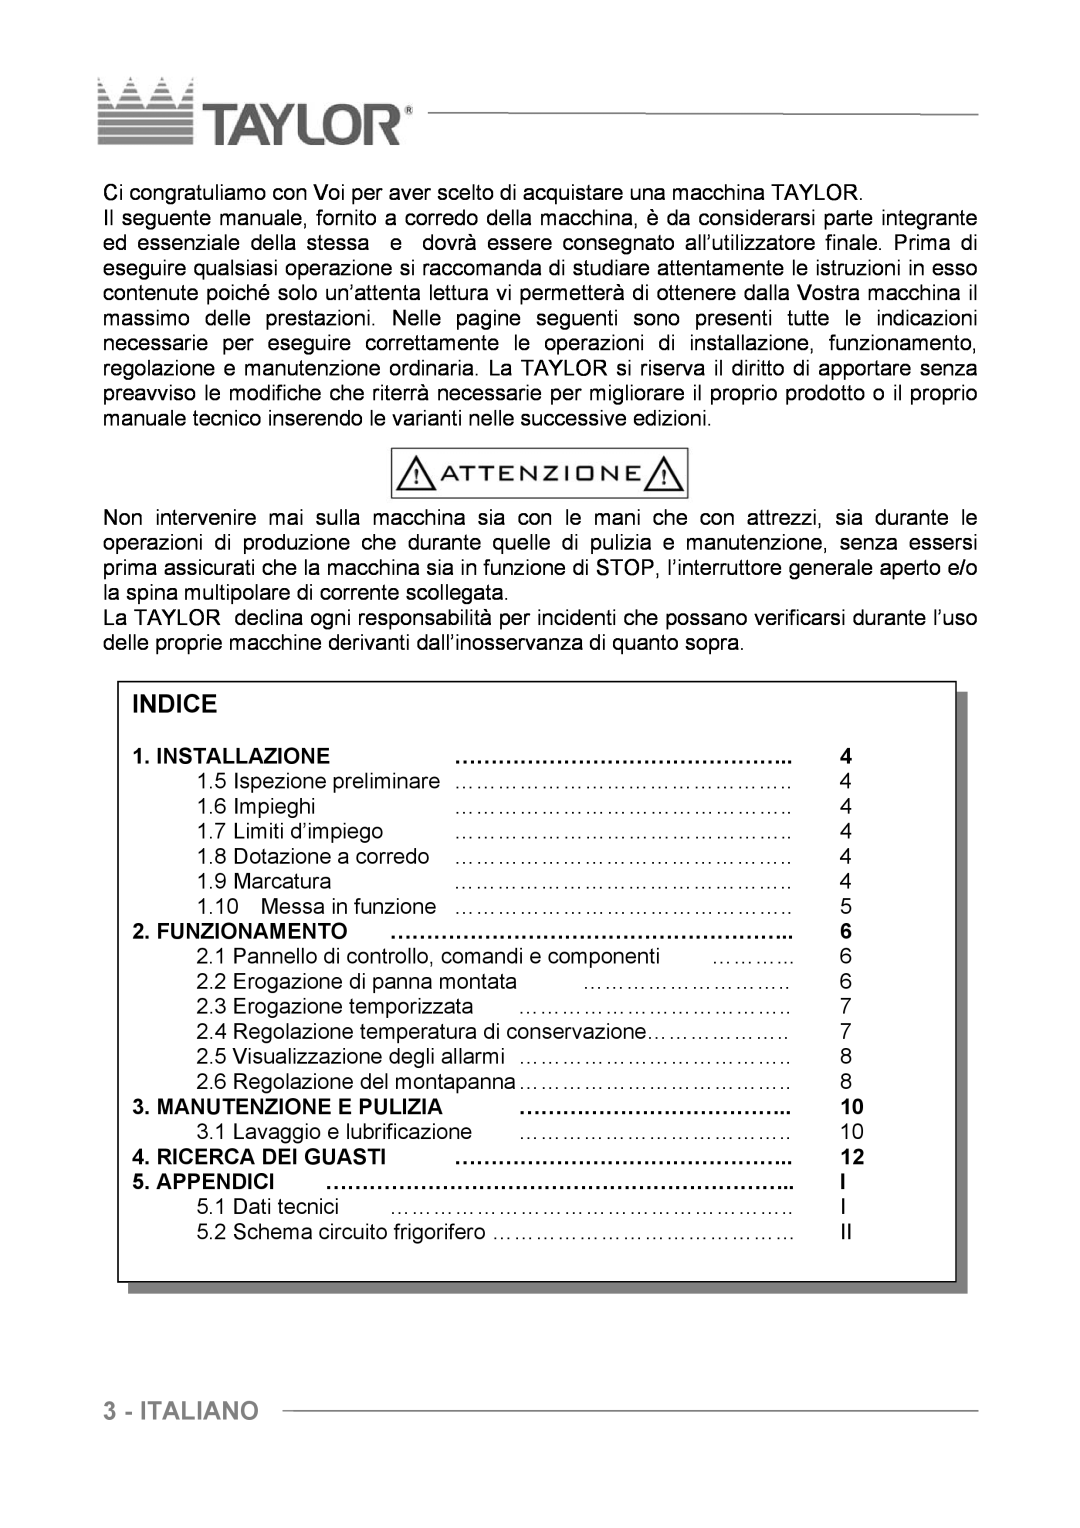 Taylor C004 - C007 manuel dutilisation Italiano, Indice 